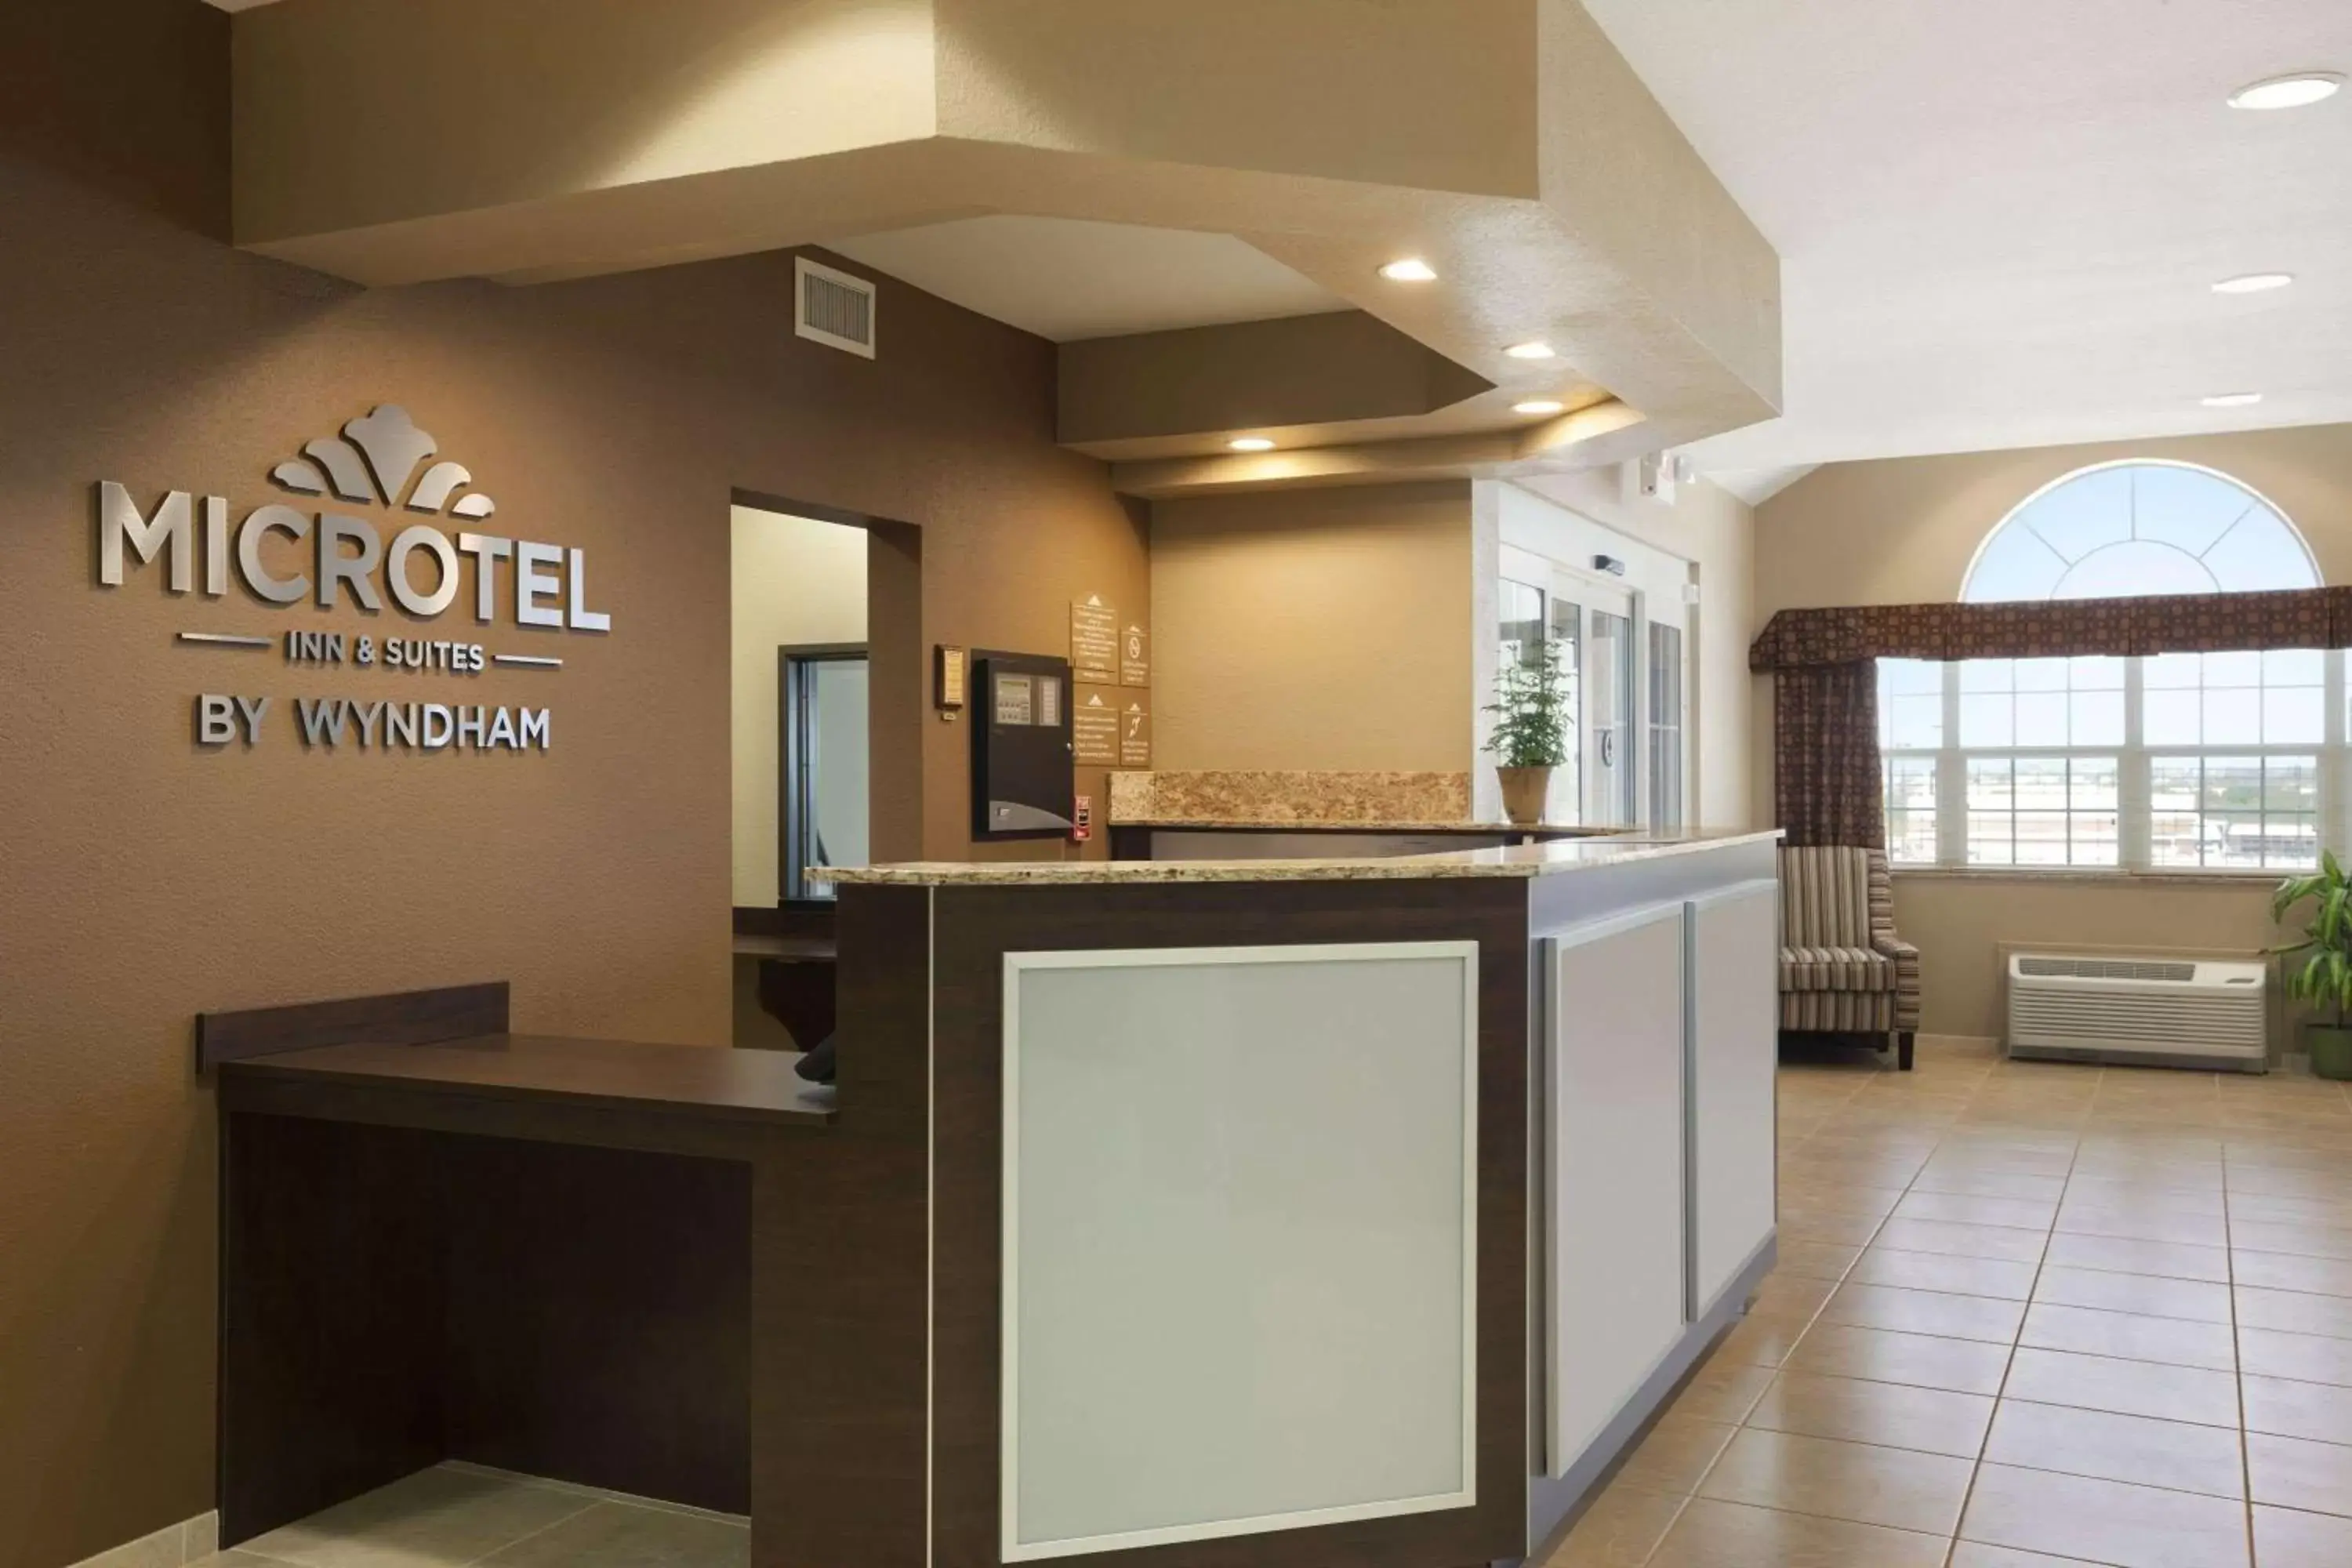 Lobby or reception in Microtel Inn & Suites Pleasanton